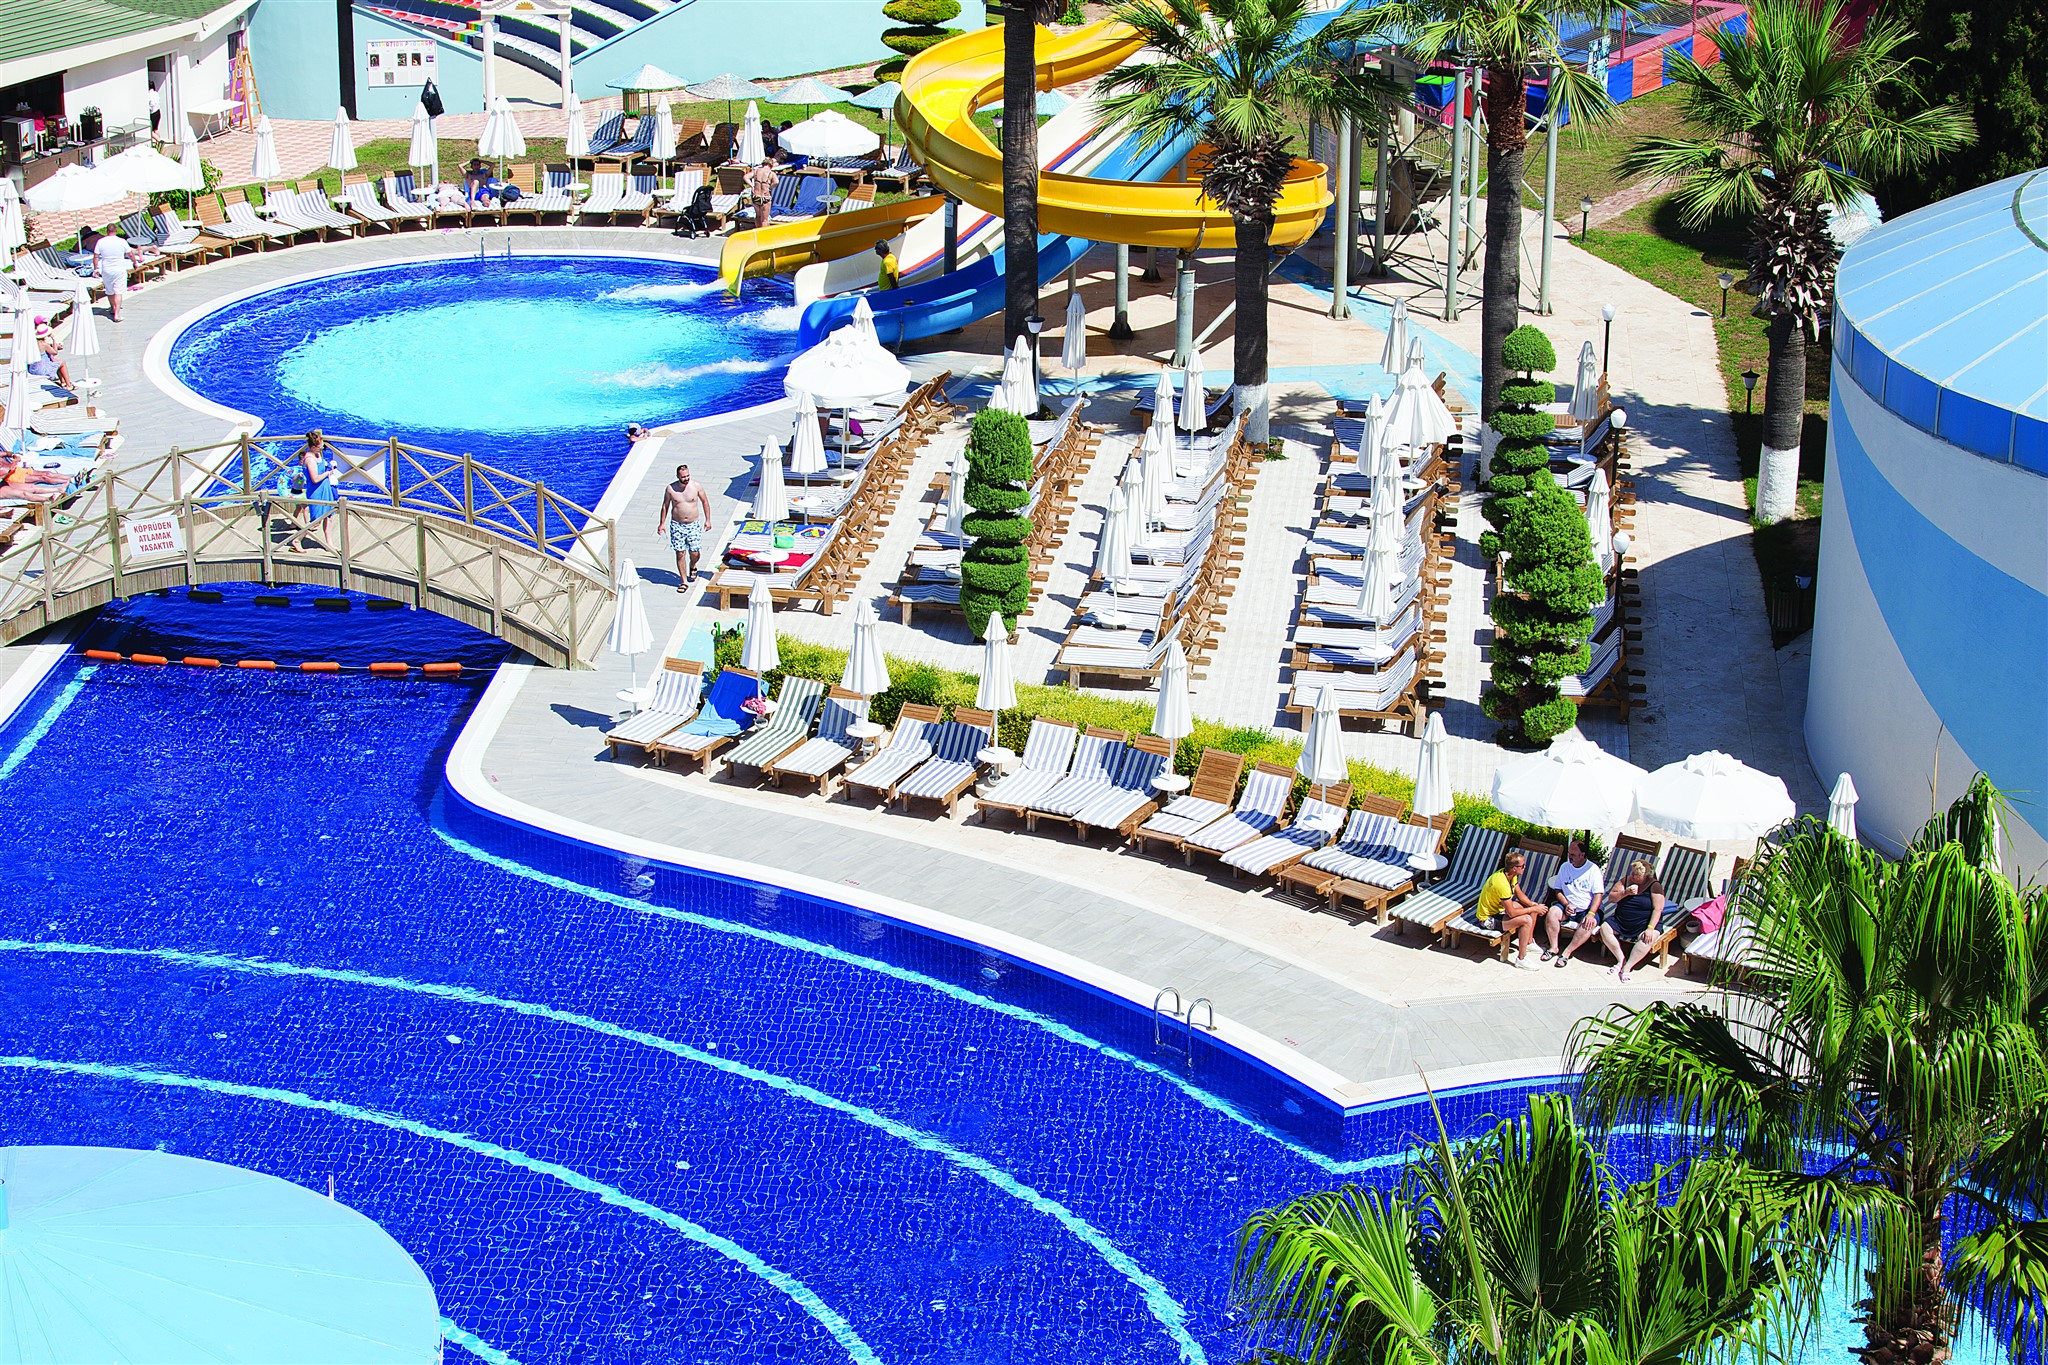 Buyuk Anadolu Didim Resort - All Inclusive (Buyuk Anadolu Didim Resort Hotel - All Inclusive)